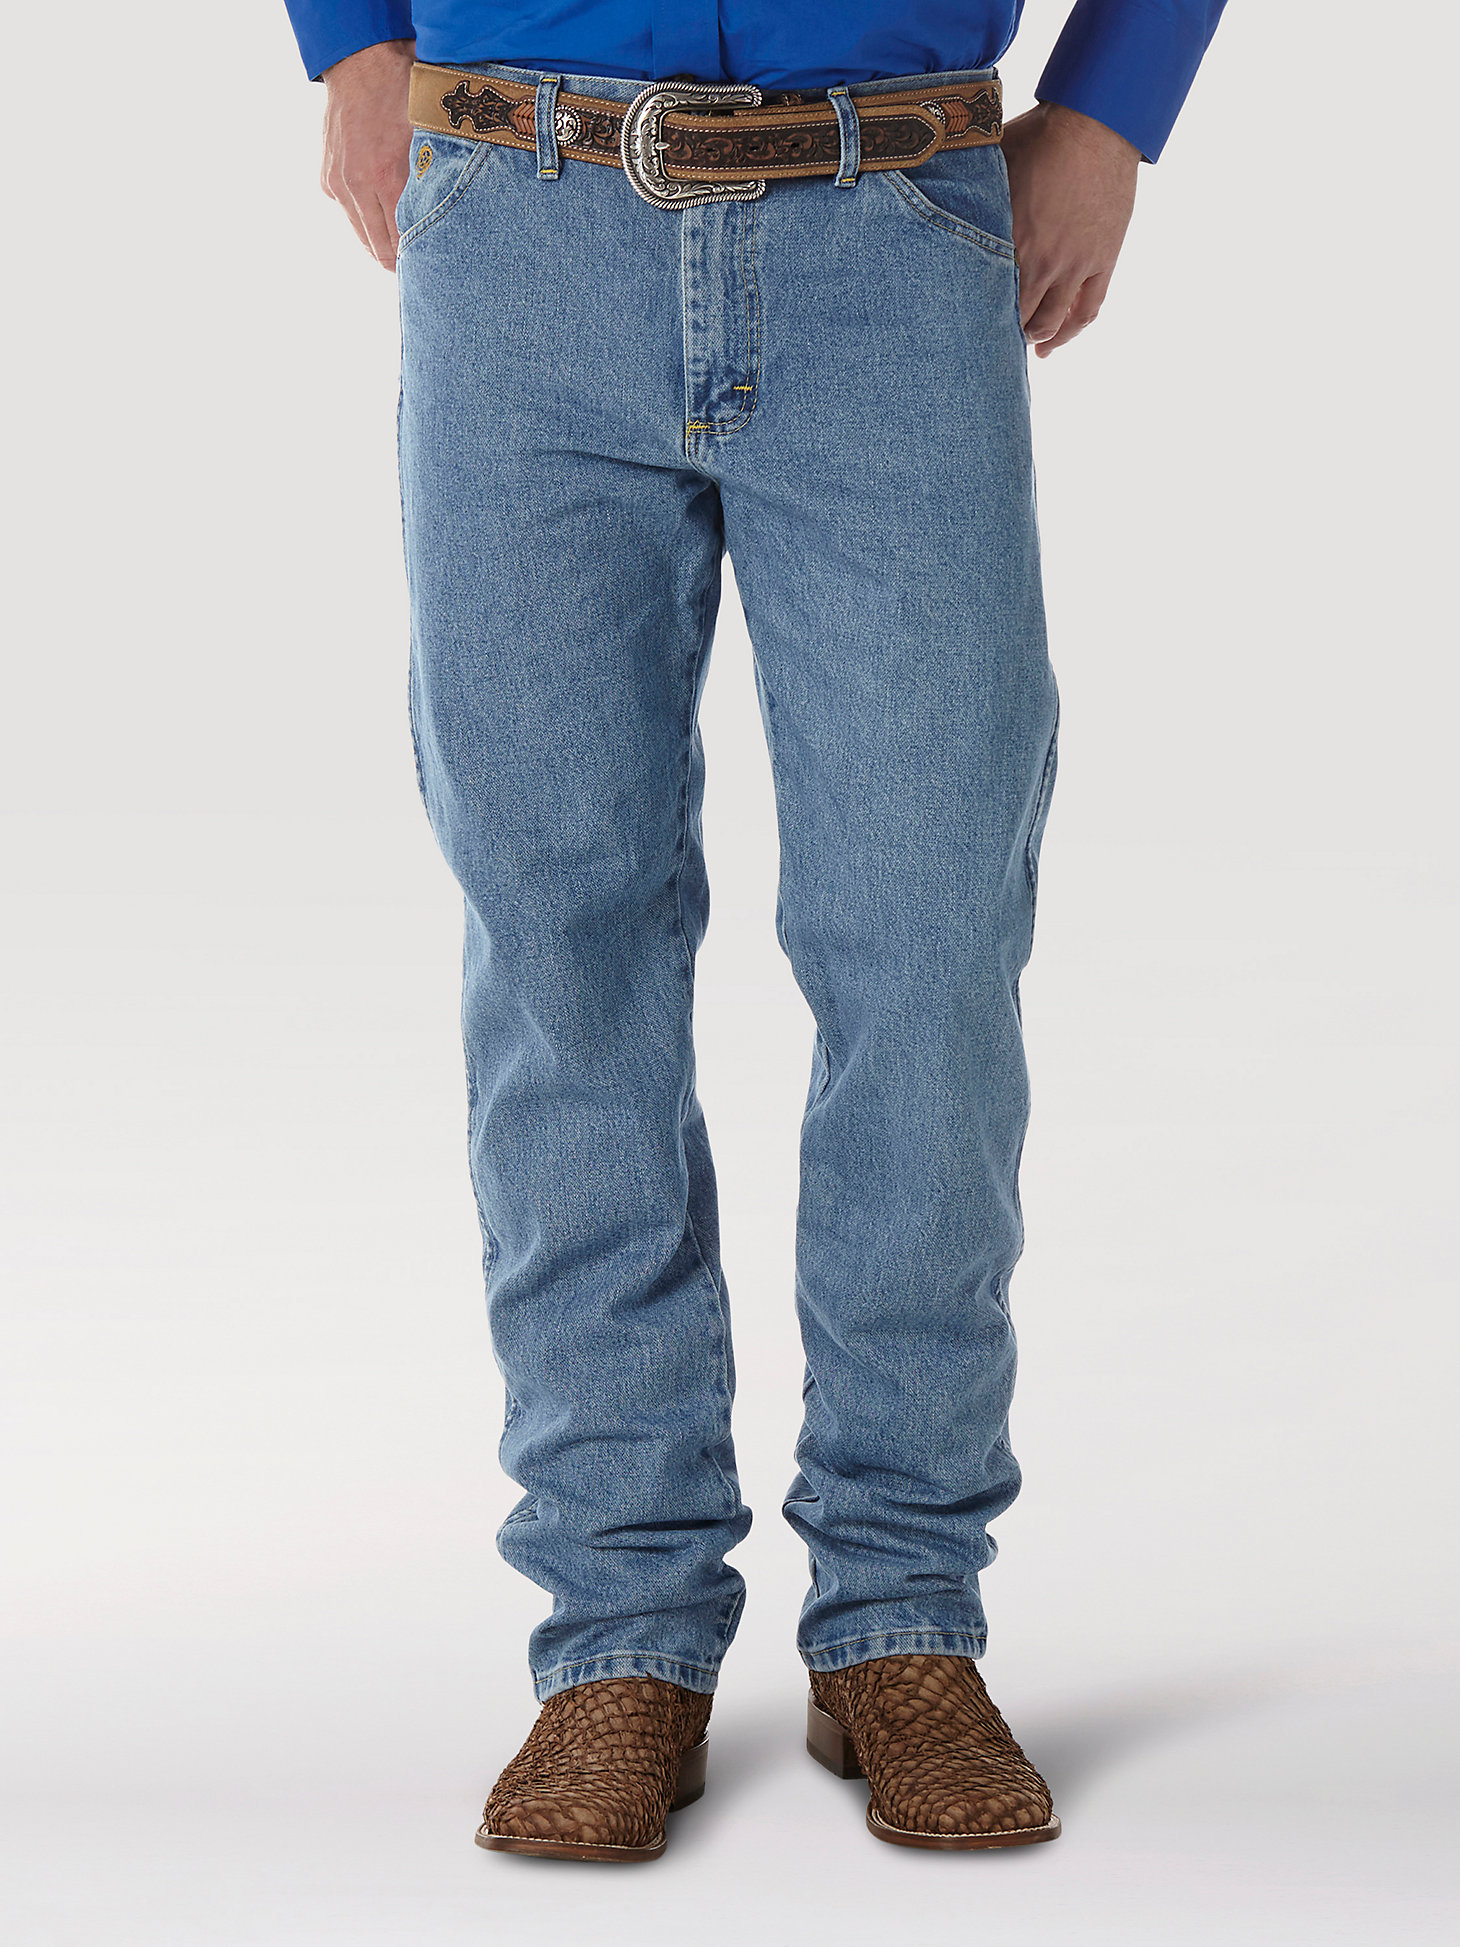 Wrangler Men's Cowboy Cut Original Fit Jeans 